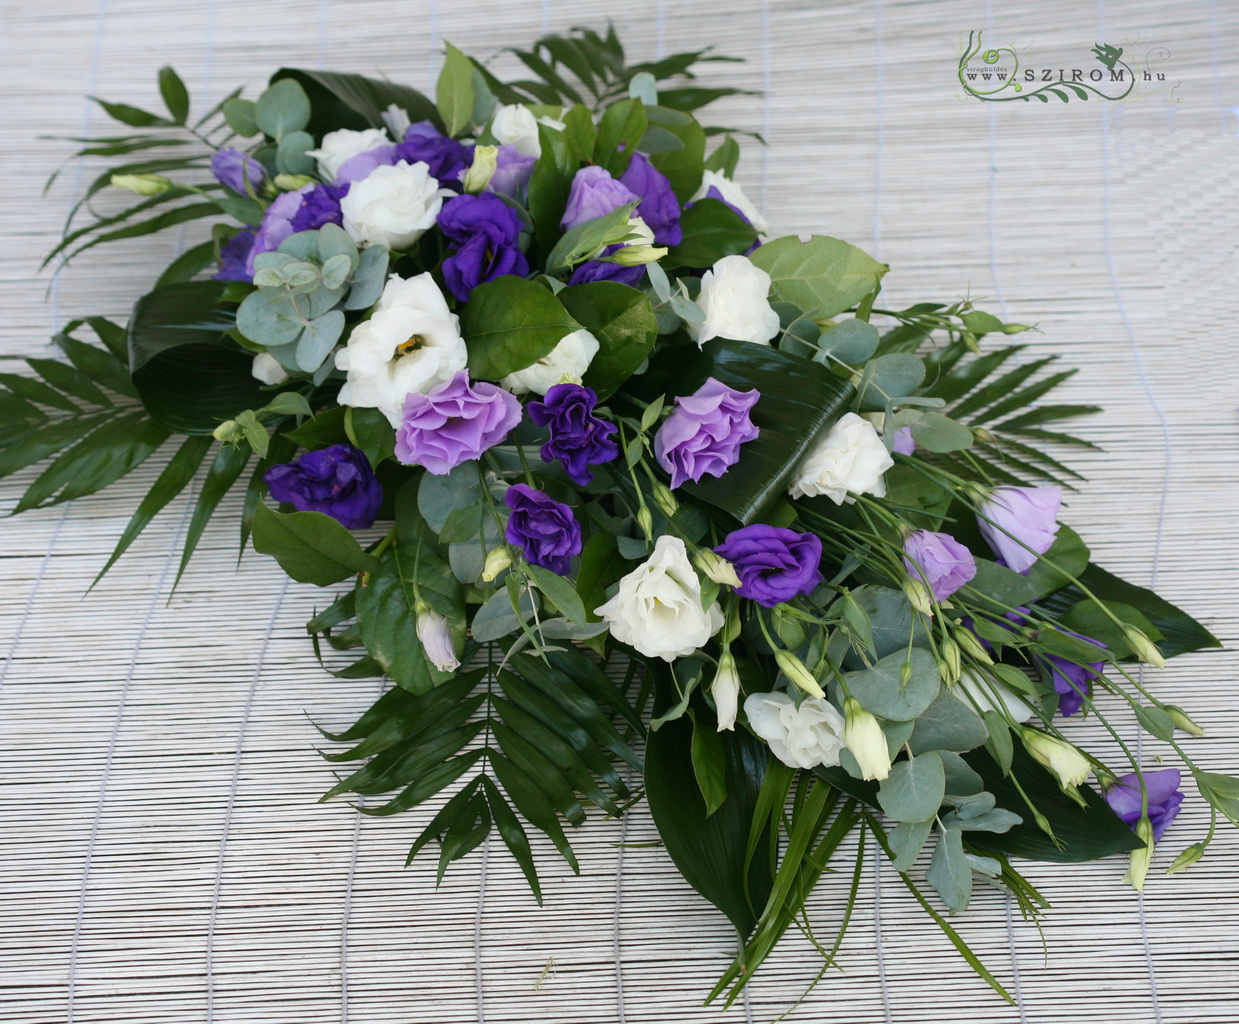 flower delivery Budapest - teardrop car flower arrangement with lisianthus (purple, white)